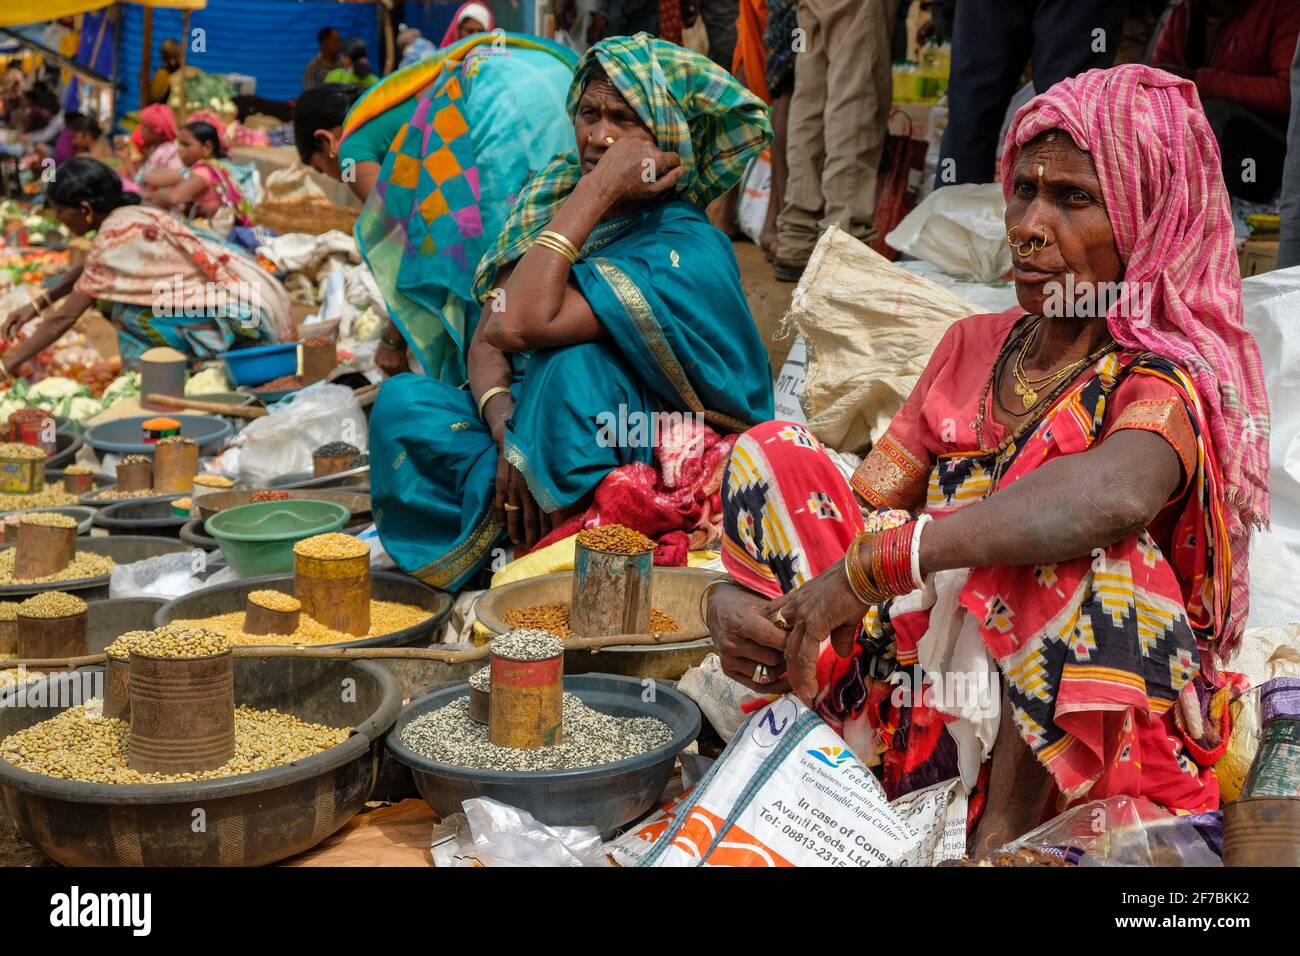 Kunduli, India - February 2021: Adivasi women from the Desia Kondh tribe selling vegetables in the Kunduli market on February 19, 2021 in, Odisha. Stock Photo